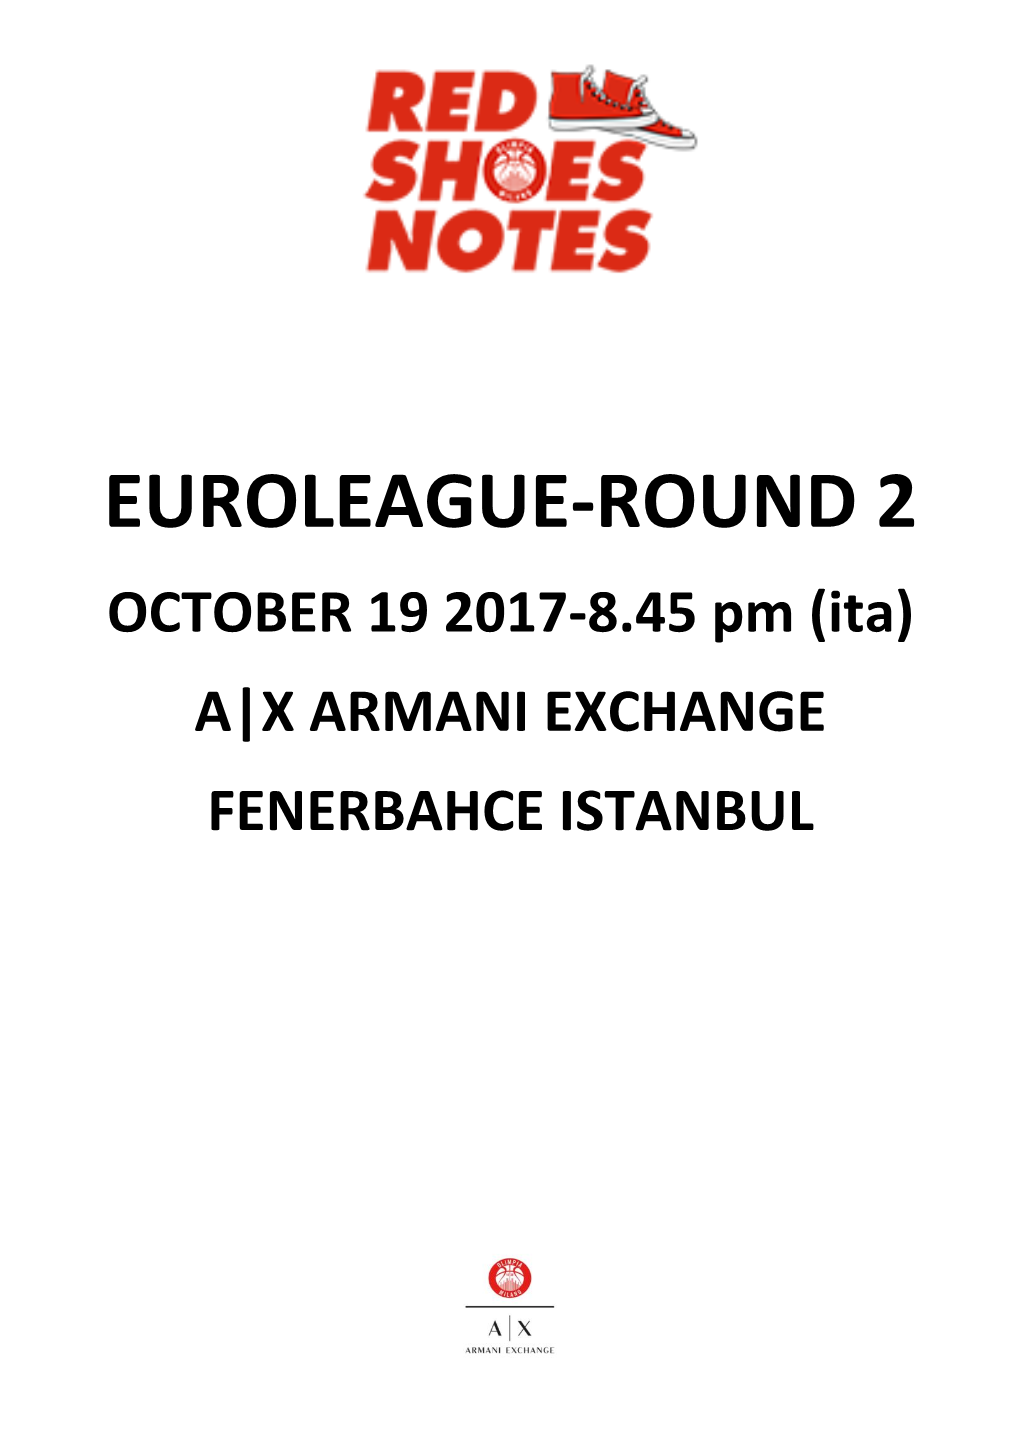 EUROLEAGUE-ROUND 2 OCTOBER 19 2017-8.45 Pm (Ita) A|X ARMANI EXCHANGE FENERBAHCE ISTANBUL